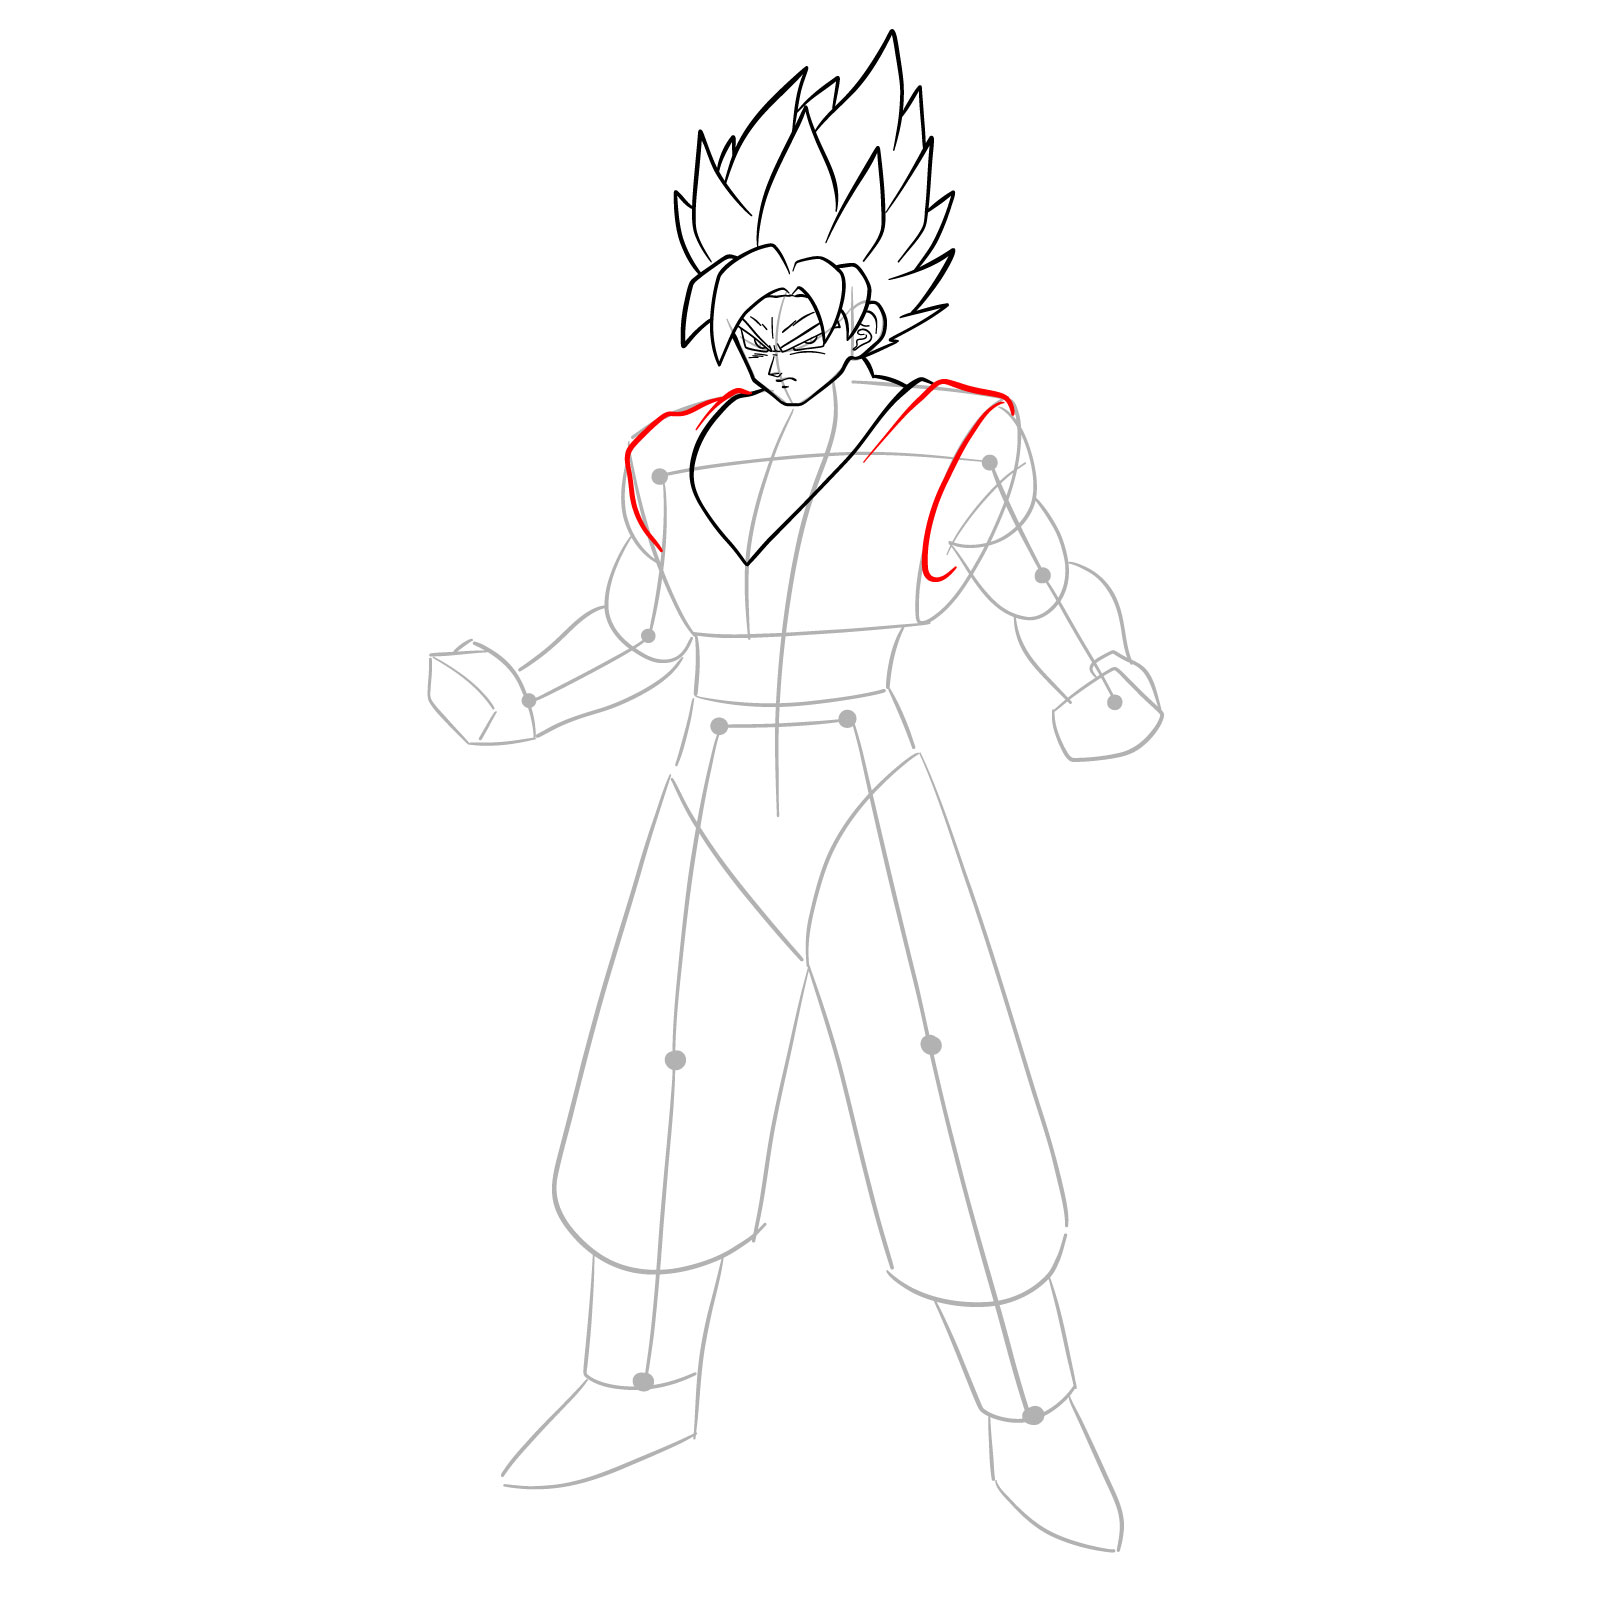 How to draw Goku in Super Saiyan form - step 17